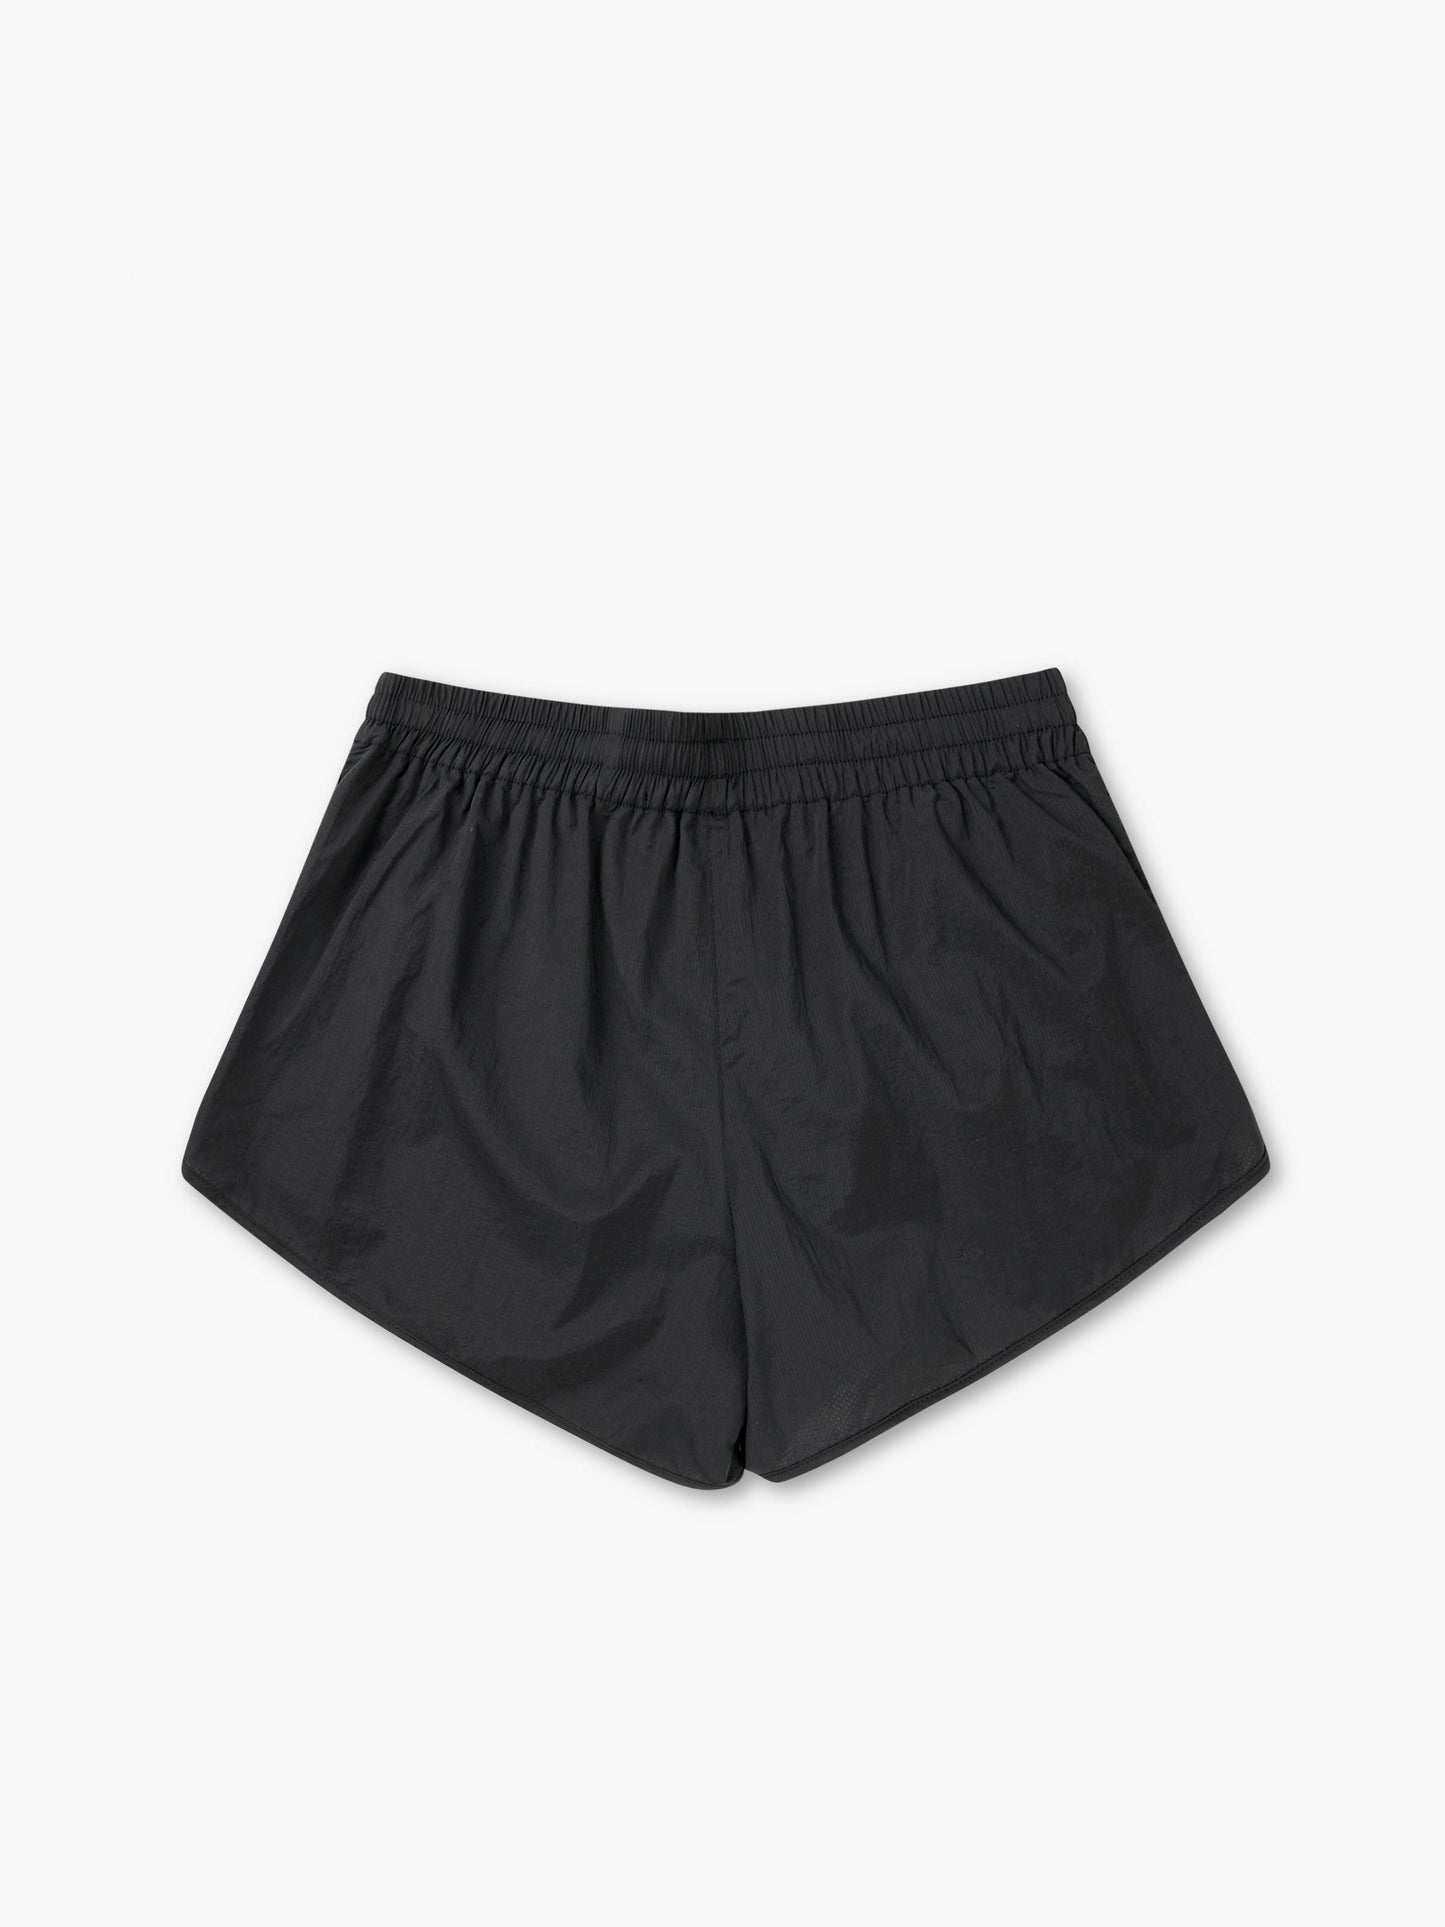 7 DAYS Runnning Shorts Shorts 001 Black